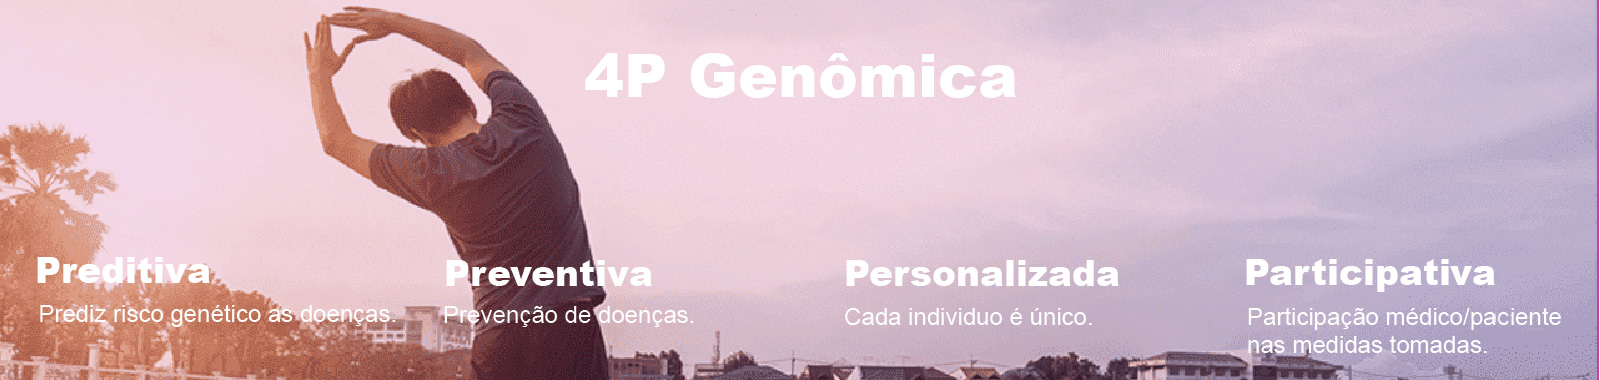 4P Genômica